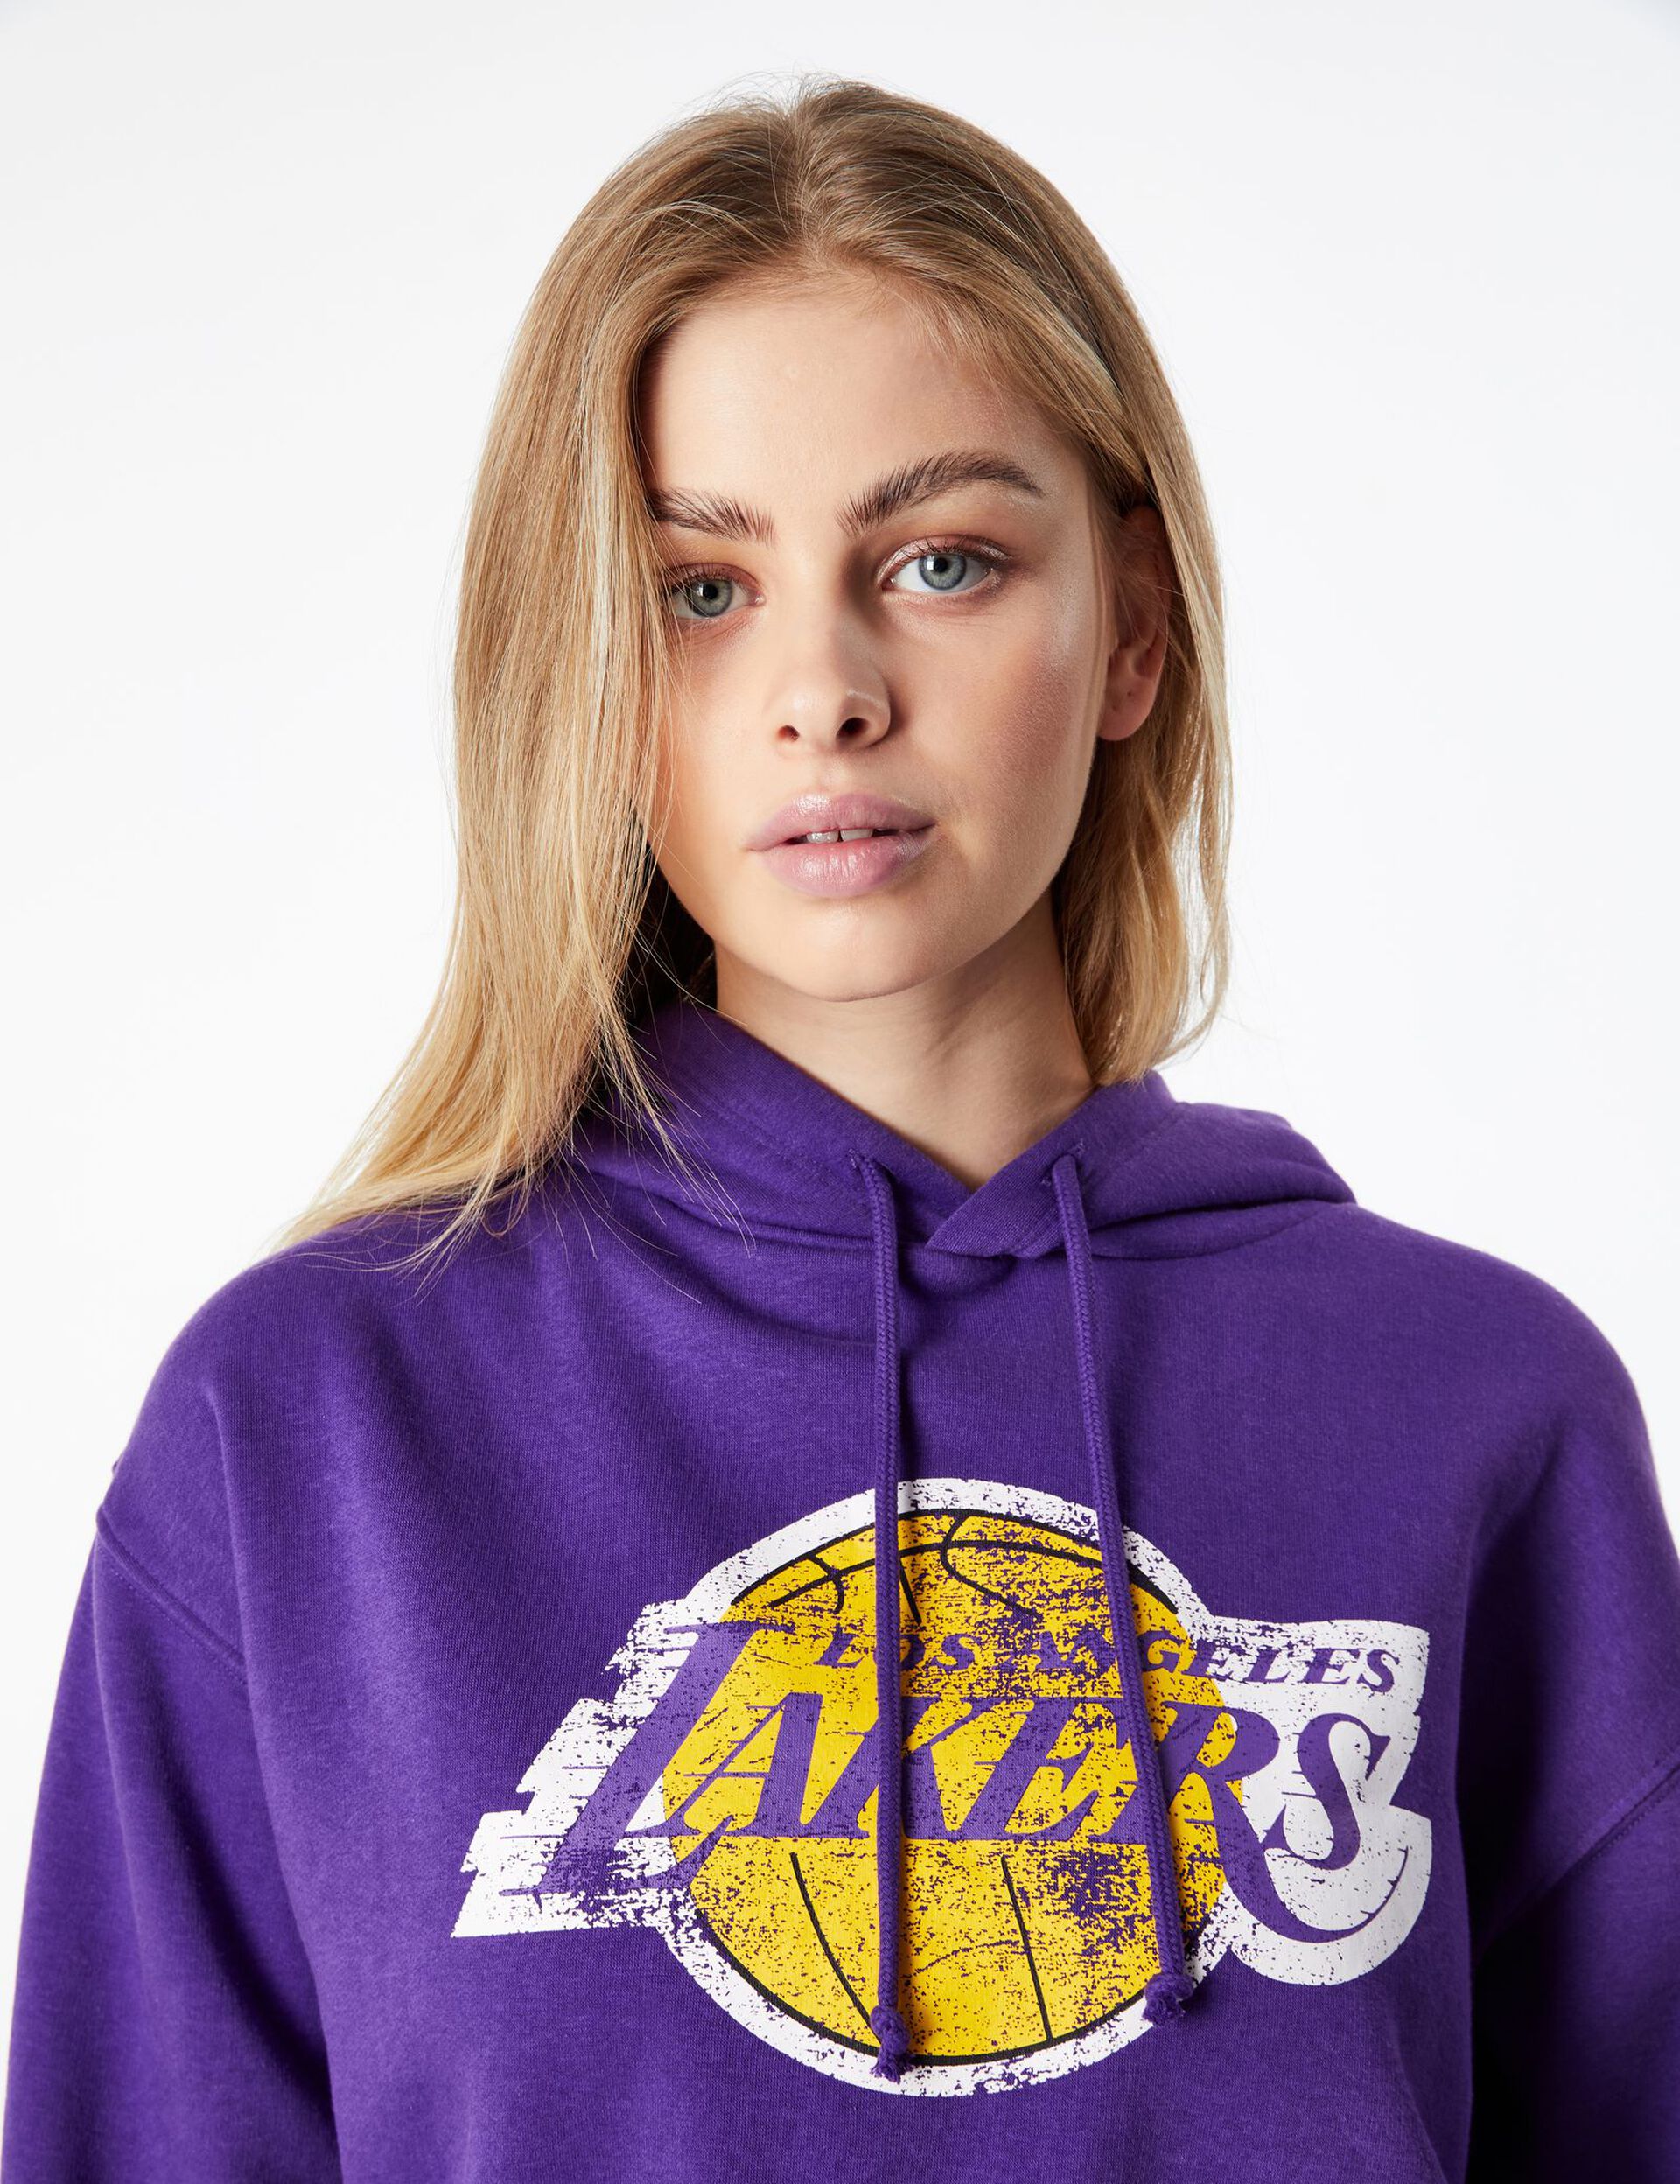 Sweat NBA Lakers violet